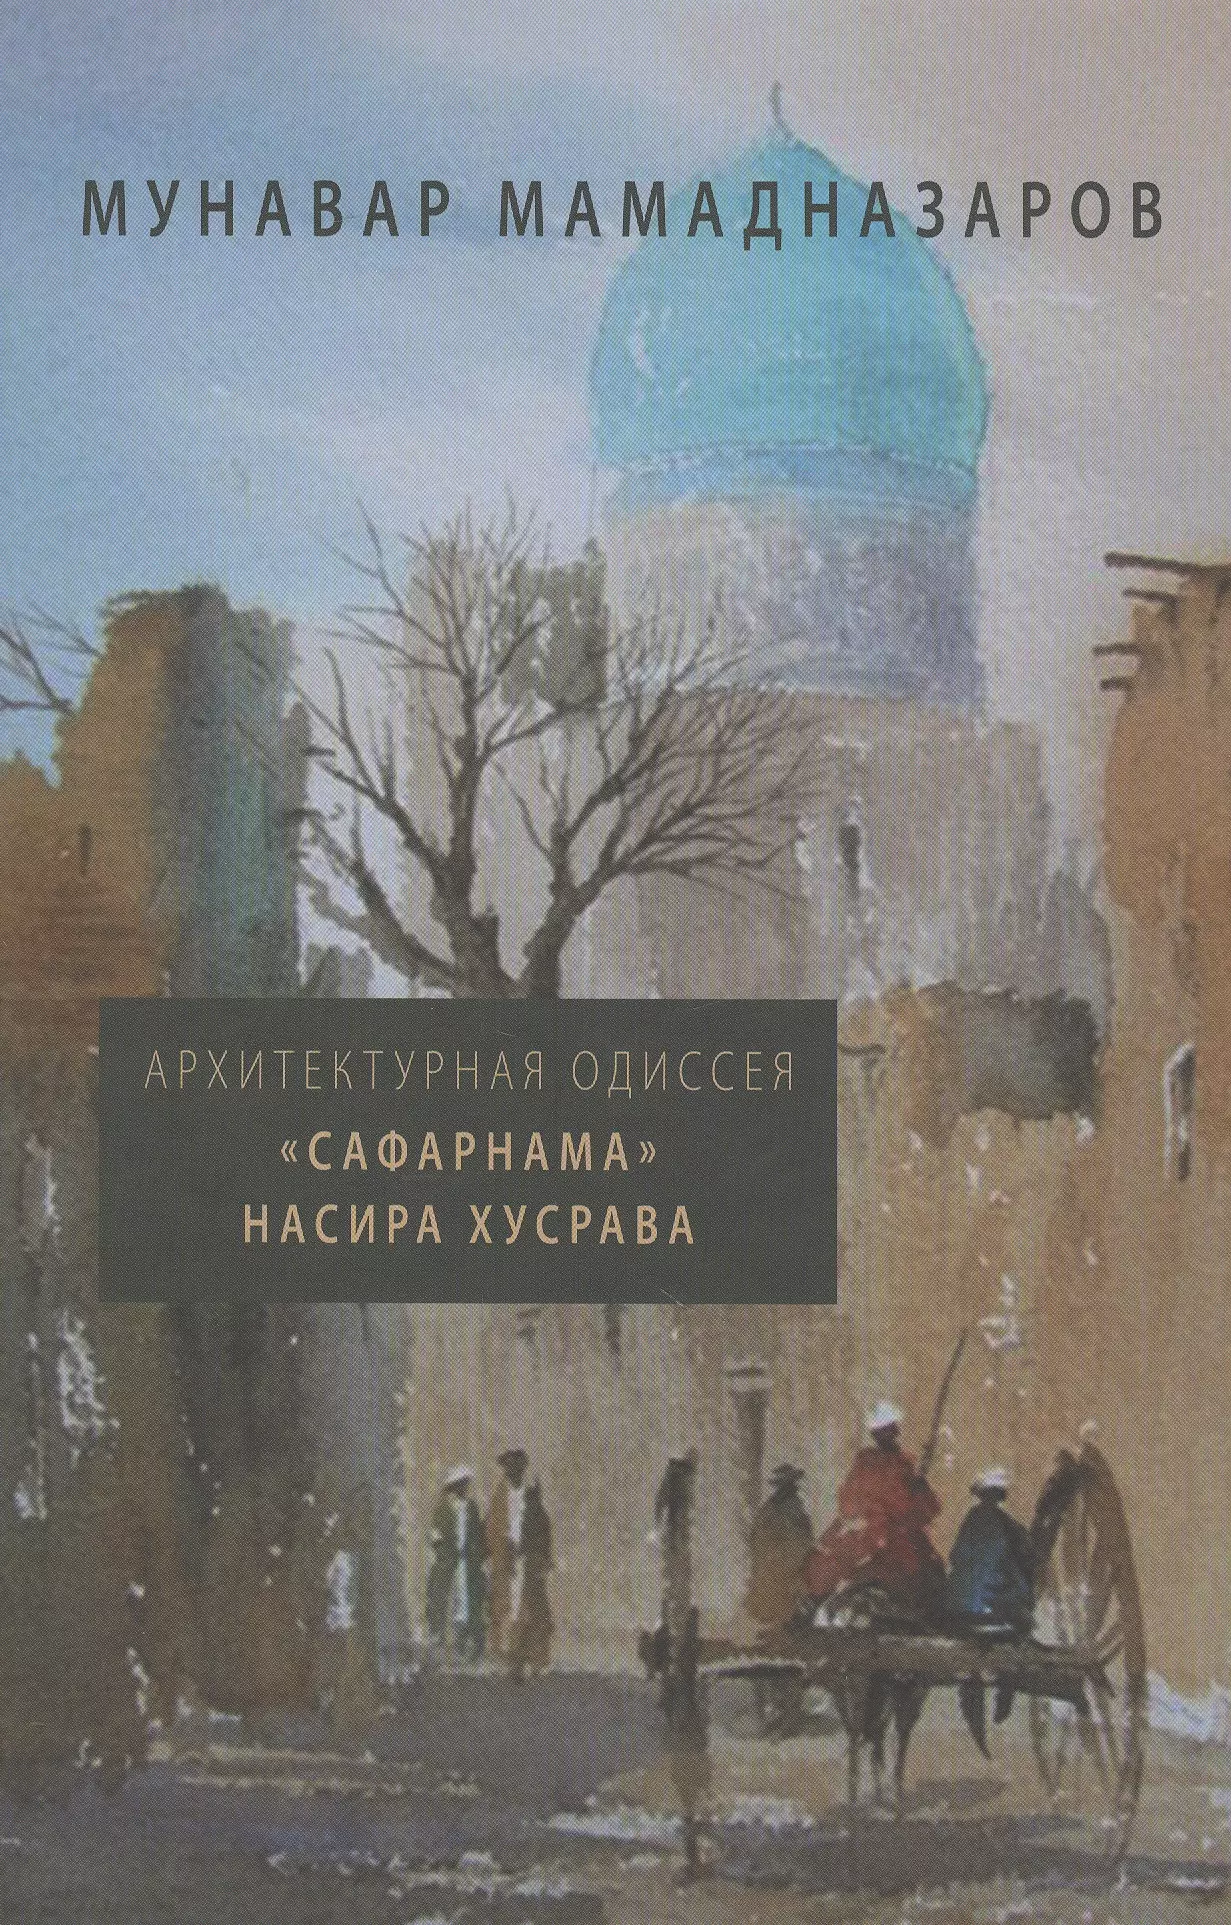 Мамадназаров М. - Архитектурная одиссея «Сафарнама» Насира Хусрава